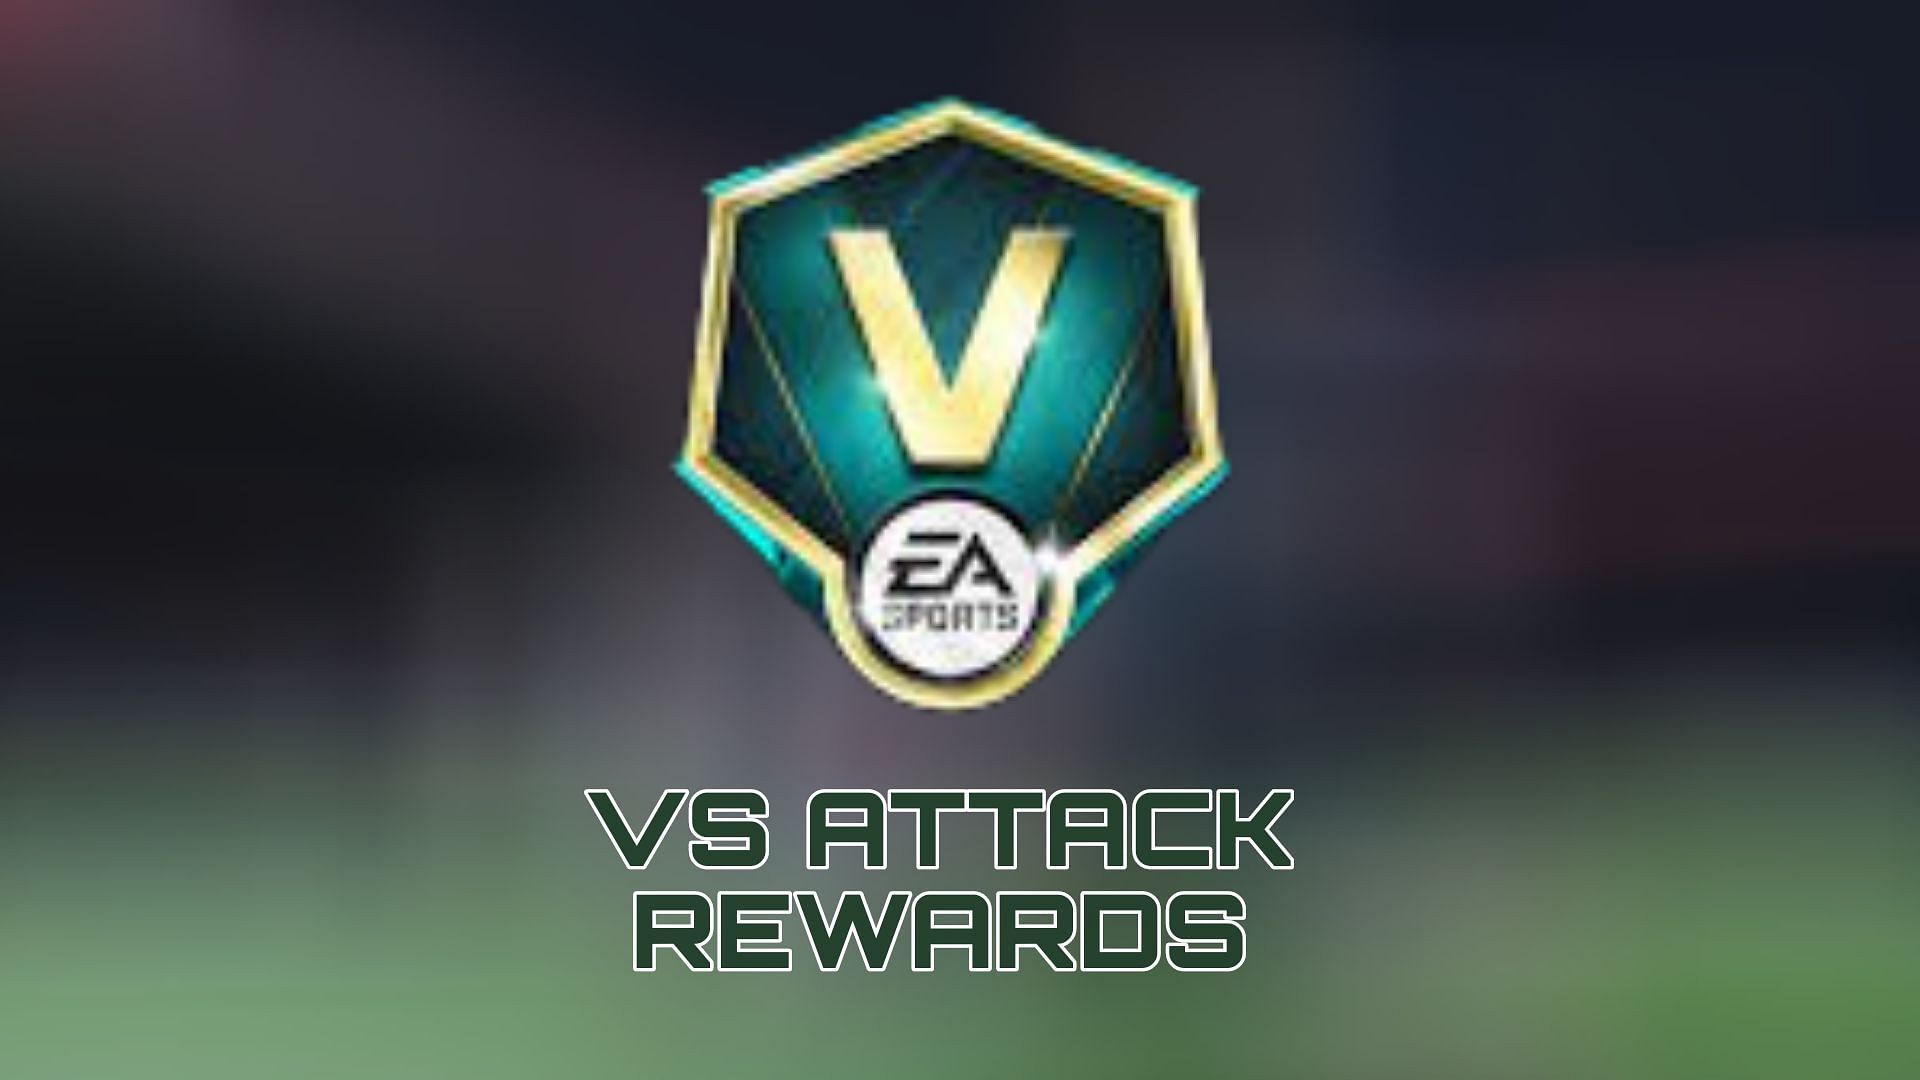 VS Attack mode in FIFA Mobile has new rewards (Image via Sportskeeda) 